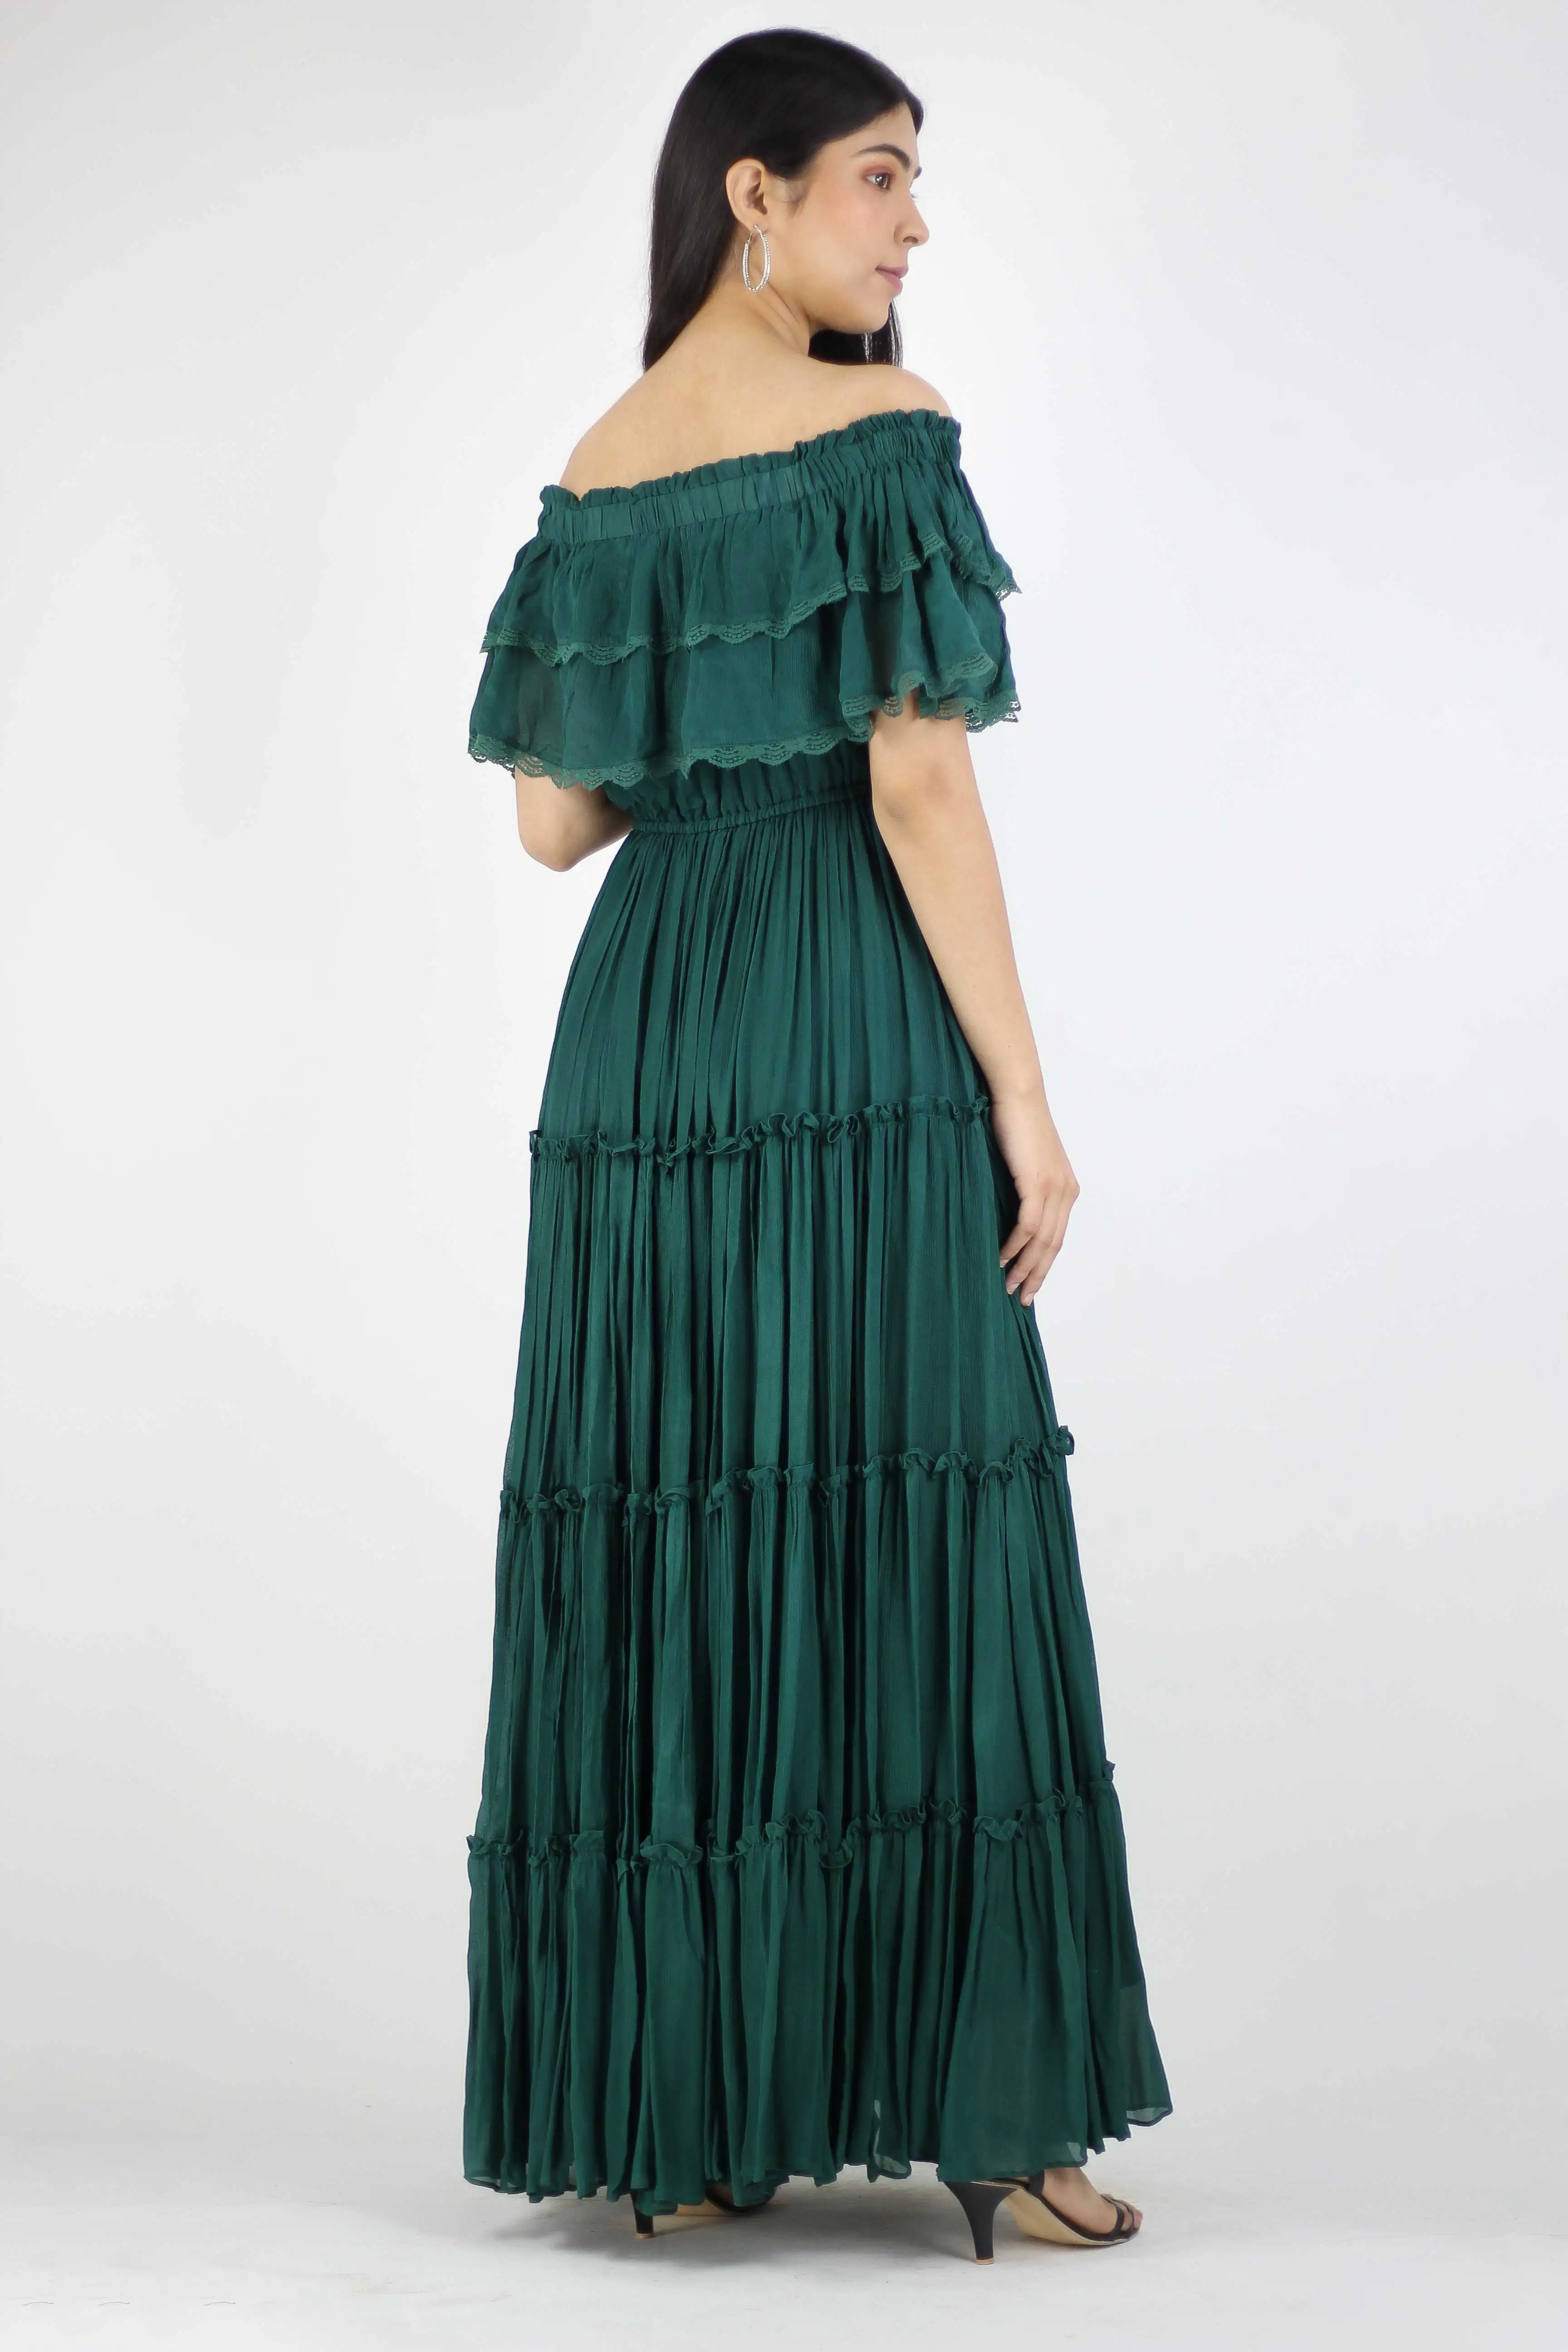 Green Off-Shoulder Chiffon Full-Length Dress